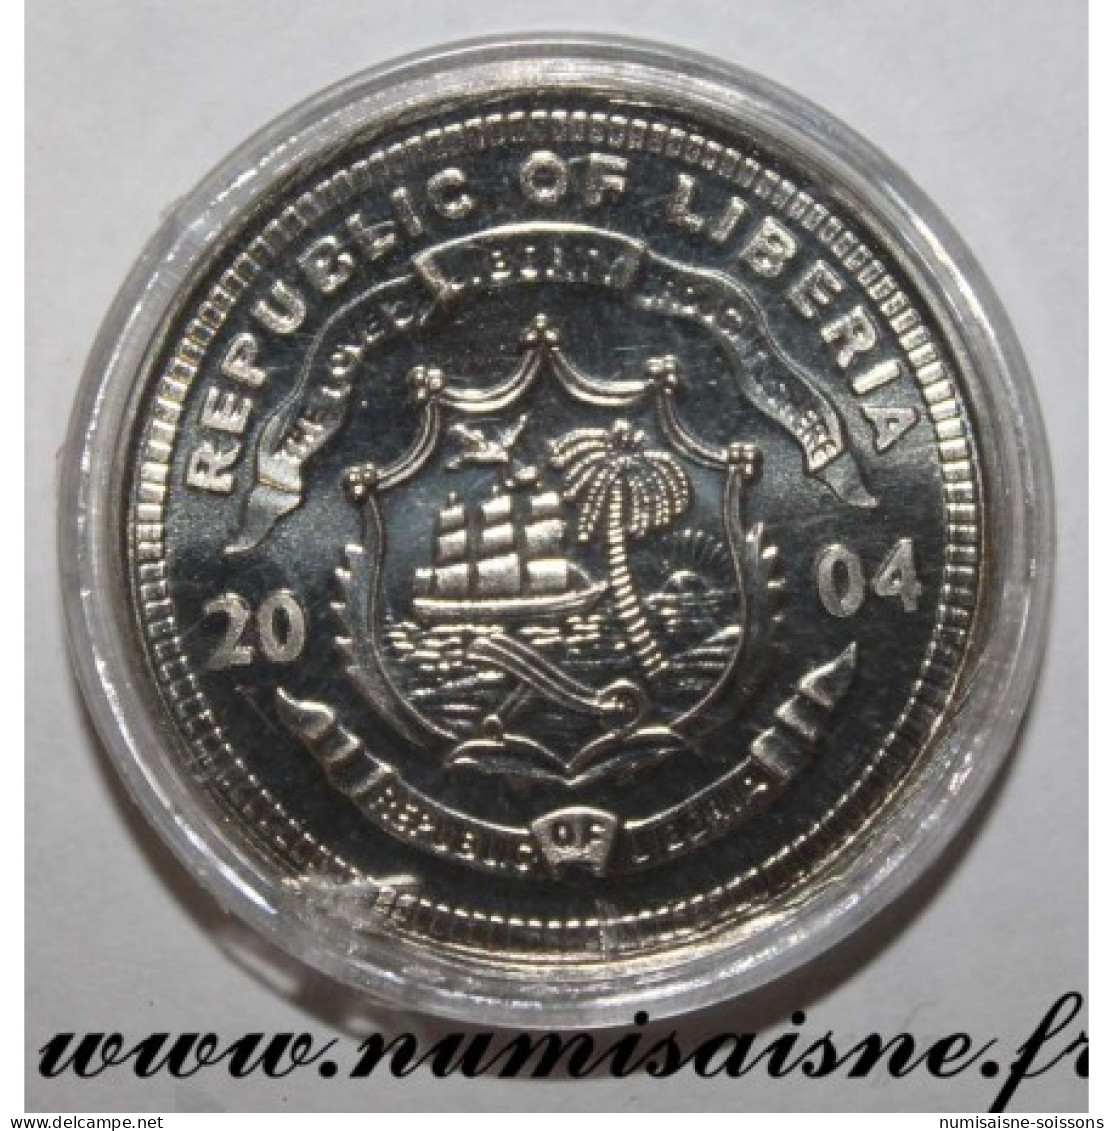 LIBÉRIA - 5 DOLLARS 2004 - NOUVELLES MONNAIES DU VATICAN - BE - Liberia